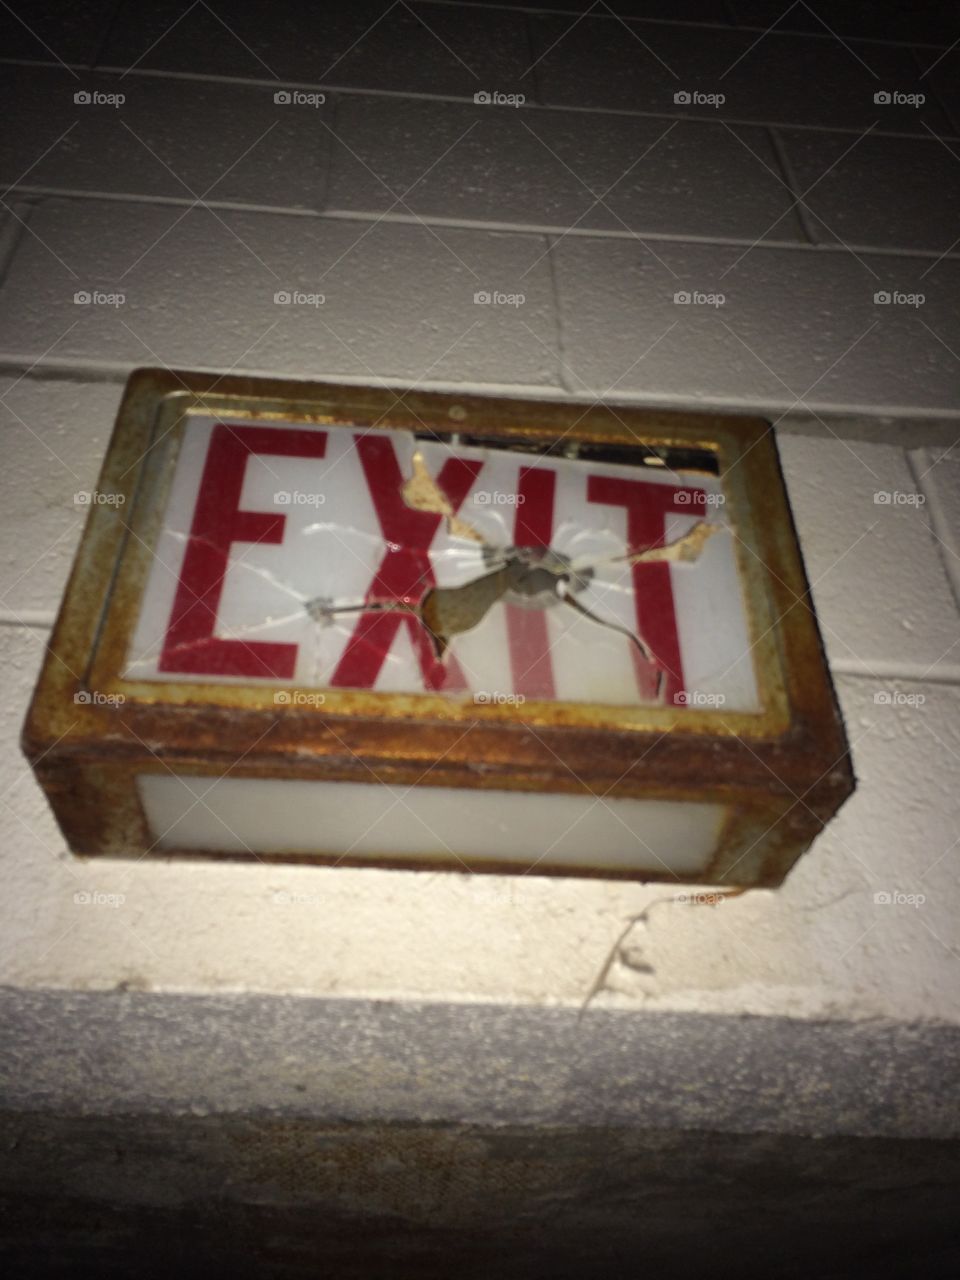 Broken exit.